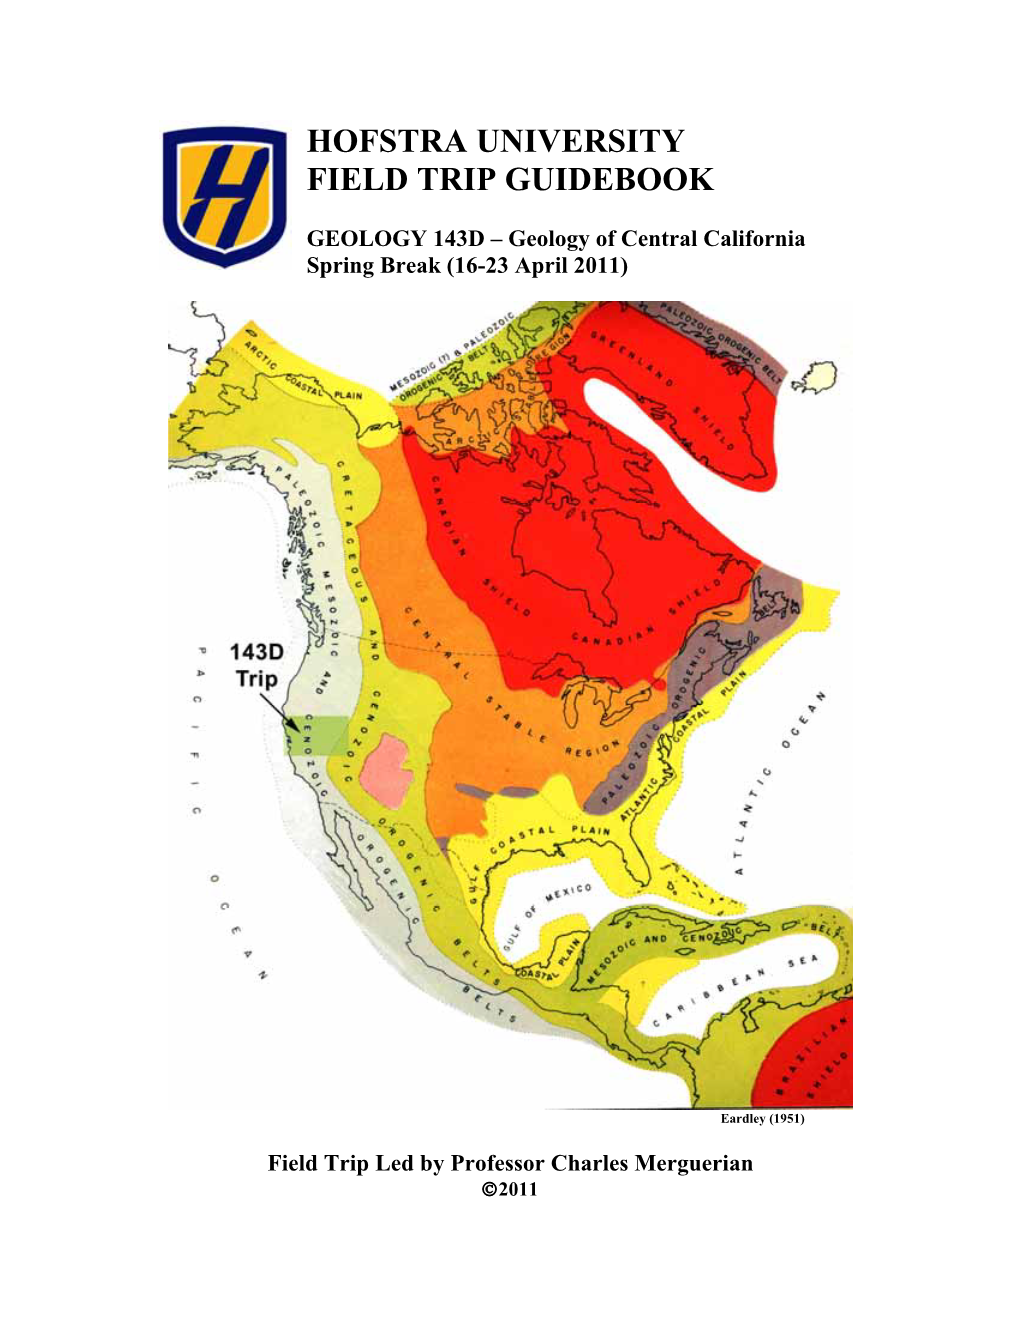 Field Guide for Hofstra University Field Course, Geology